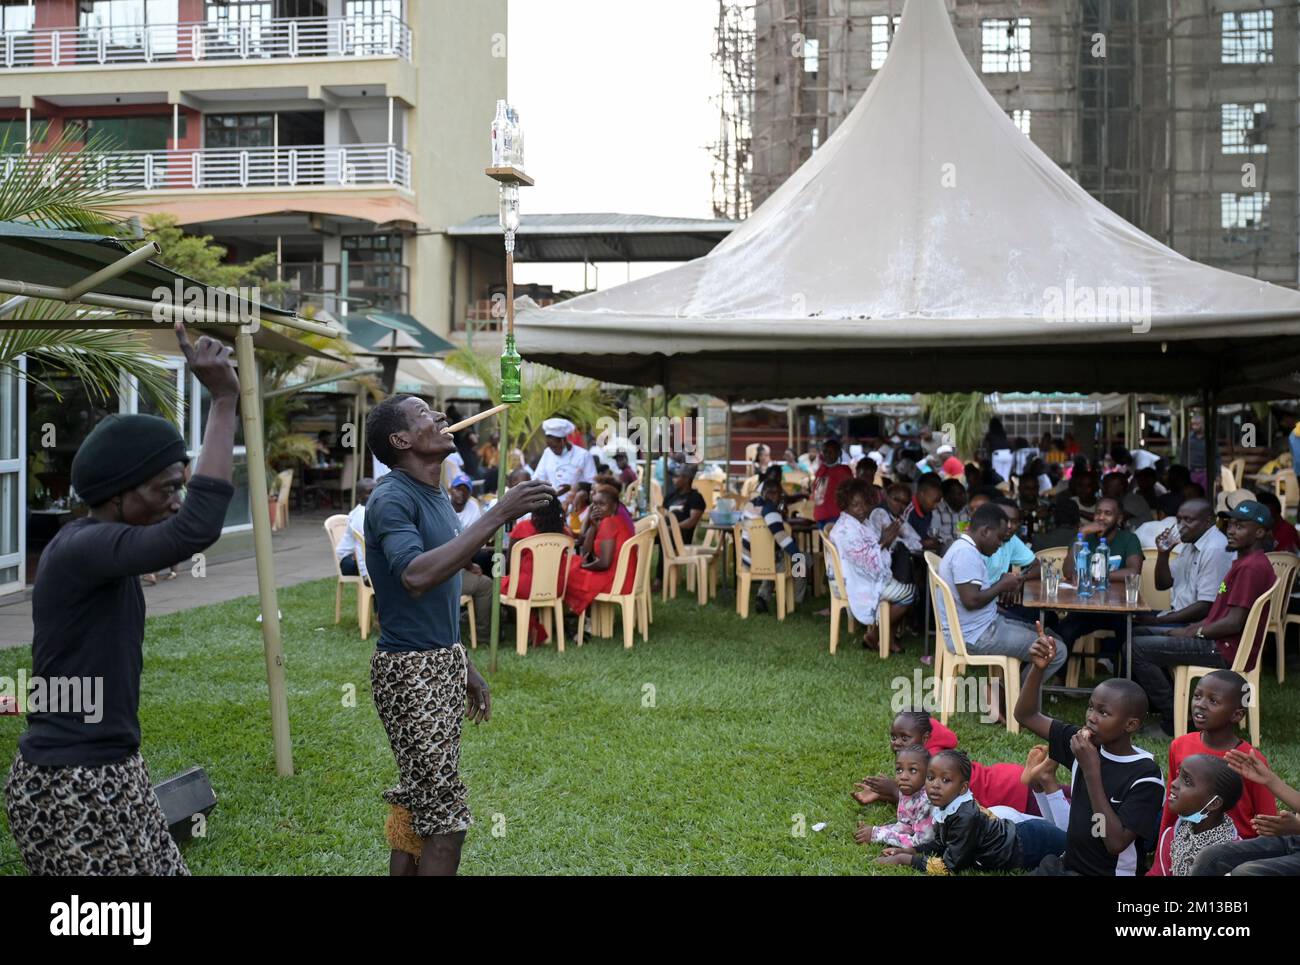 KENIA, Nairobi, clase media en jardín de cerveza, actuación acrobática / KENIA, Nairobi, Mittelklasse im Biergarten, akrobatische Vorführung zur Unterhaltung der Gäste Foto de stock